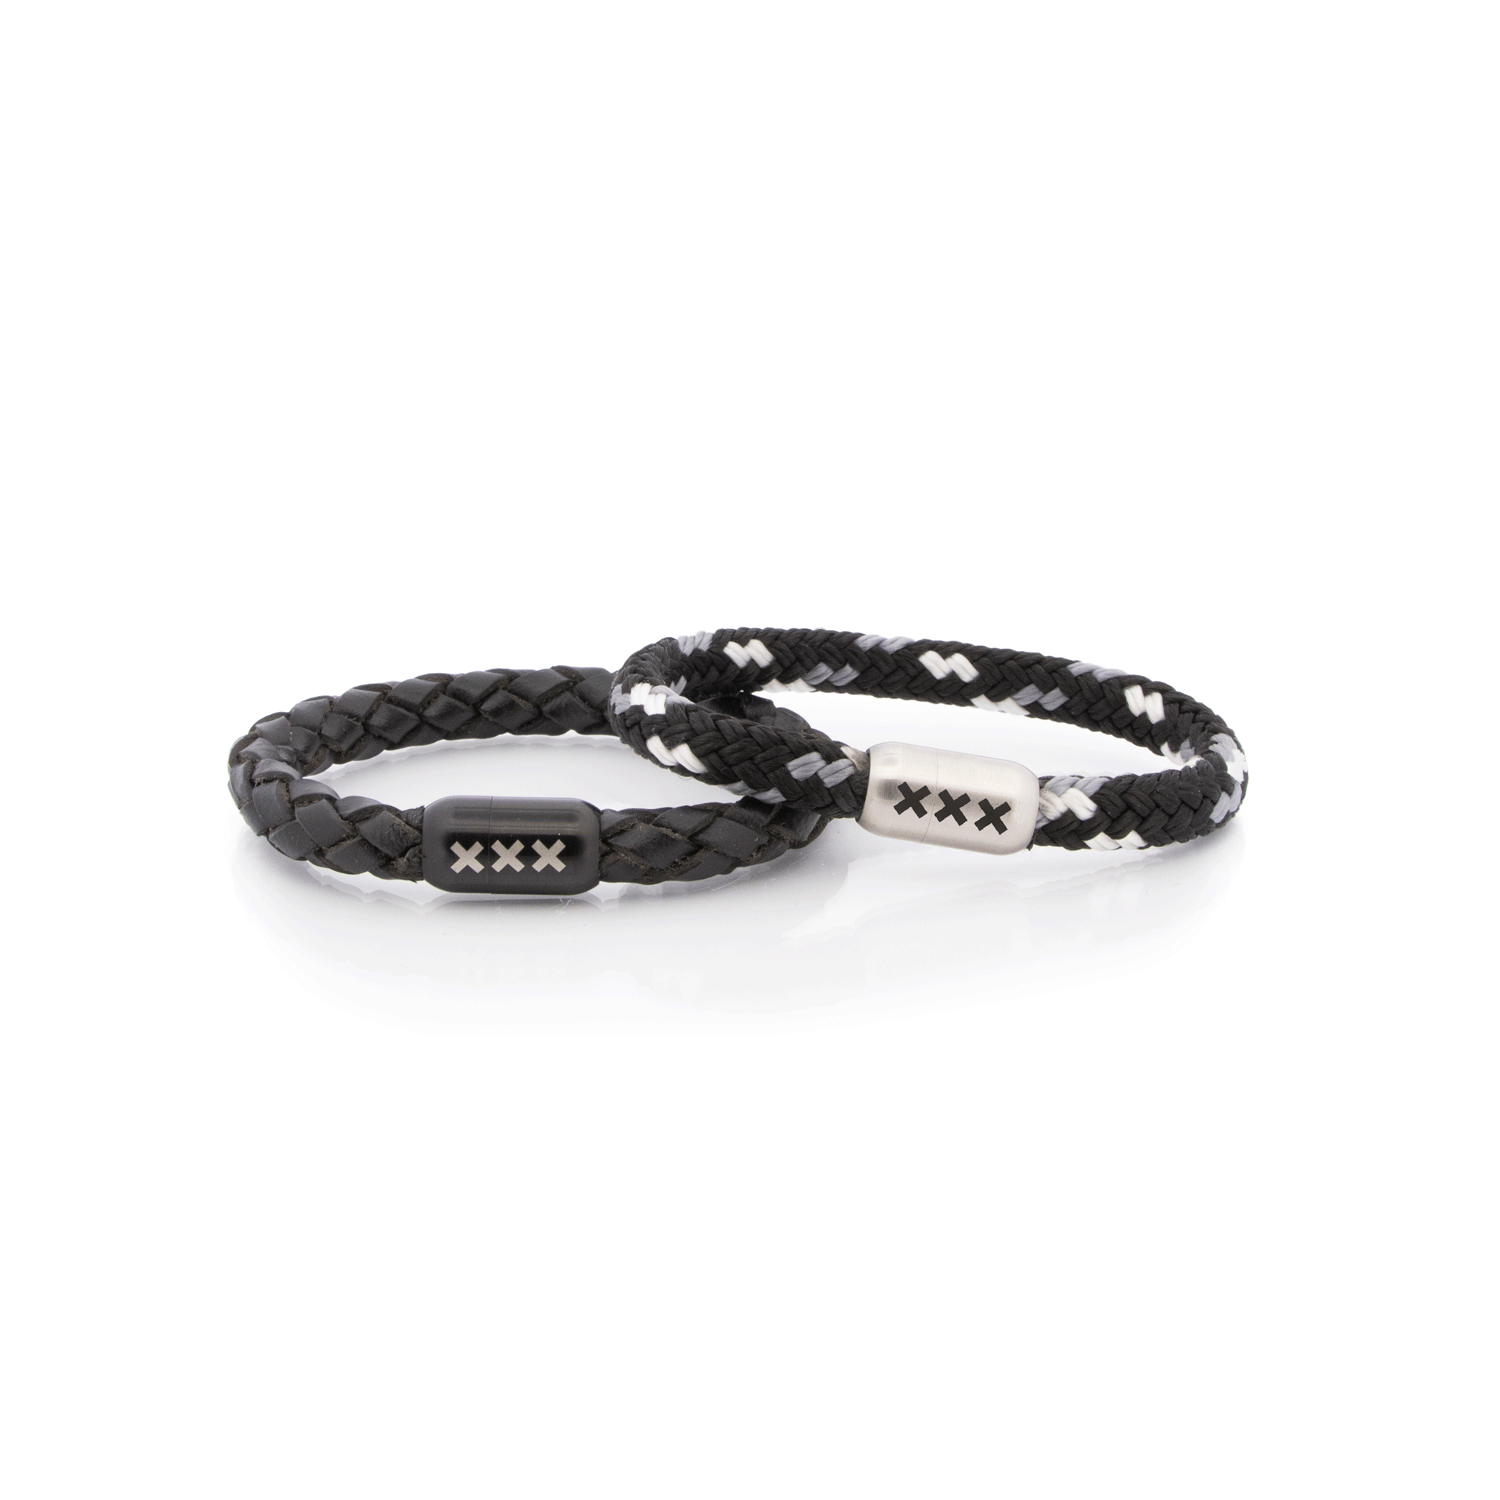 AMSTERDAM SIERAAD - Bracelet Leather Black and white